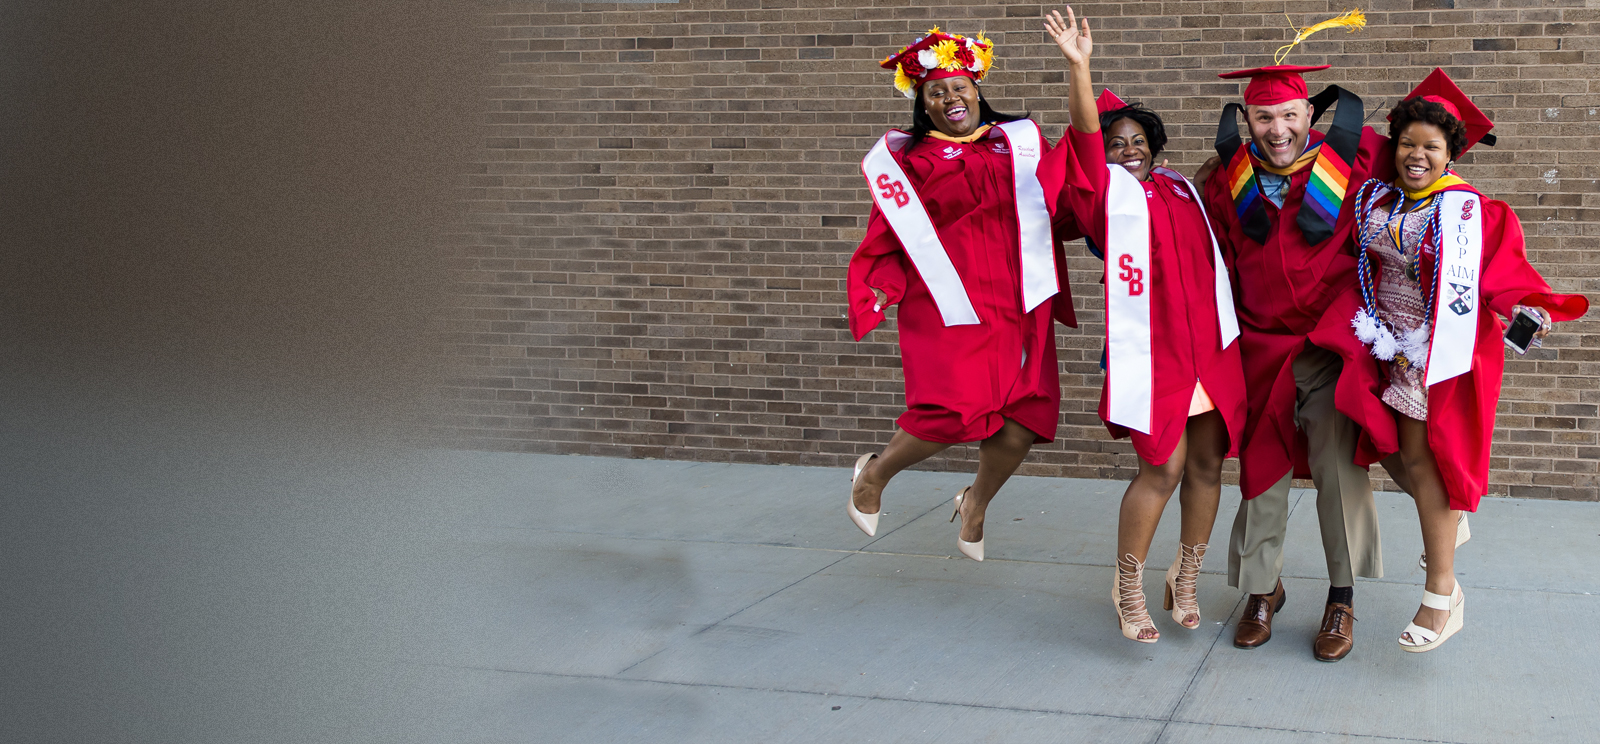 Graduation students jumping for joy